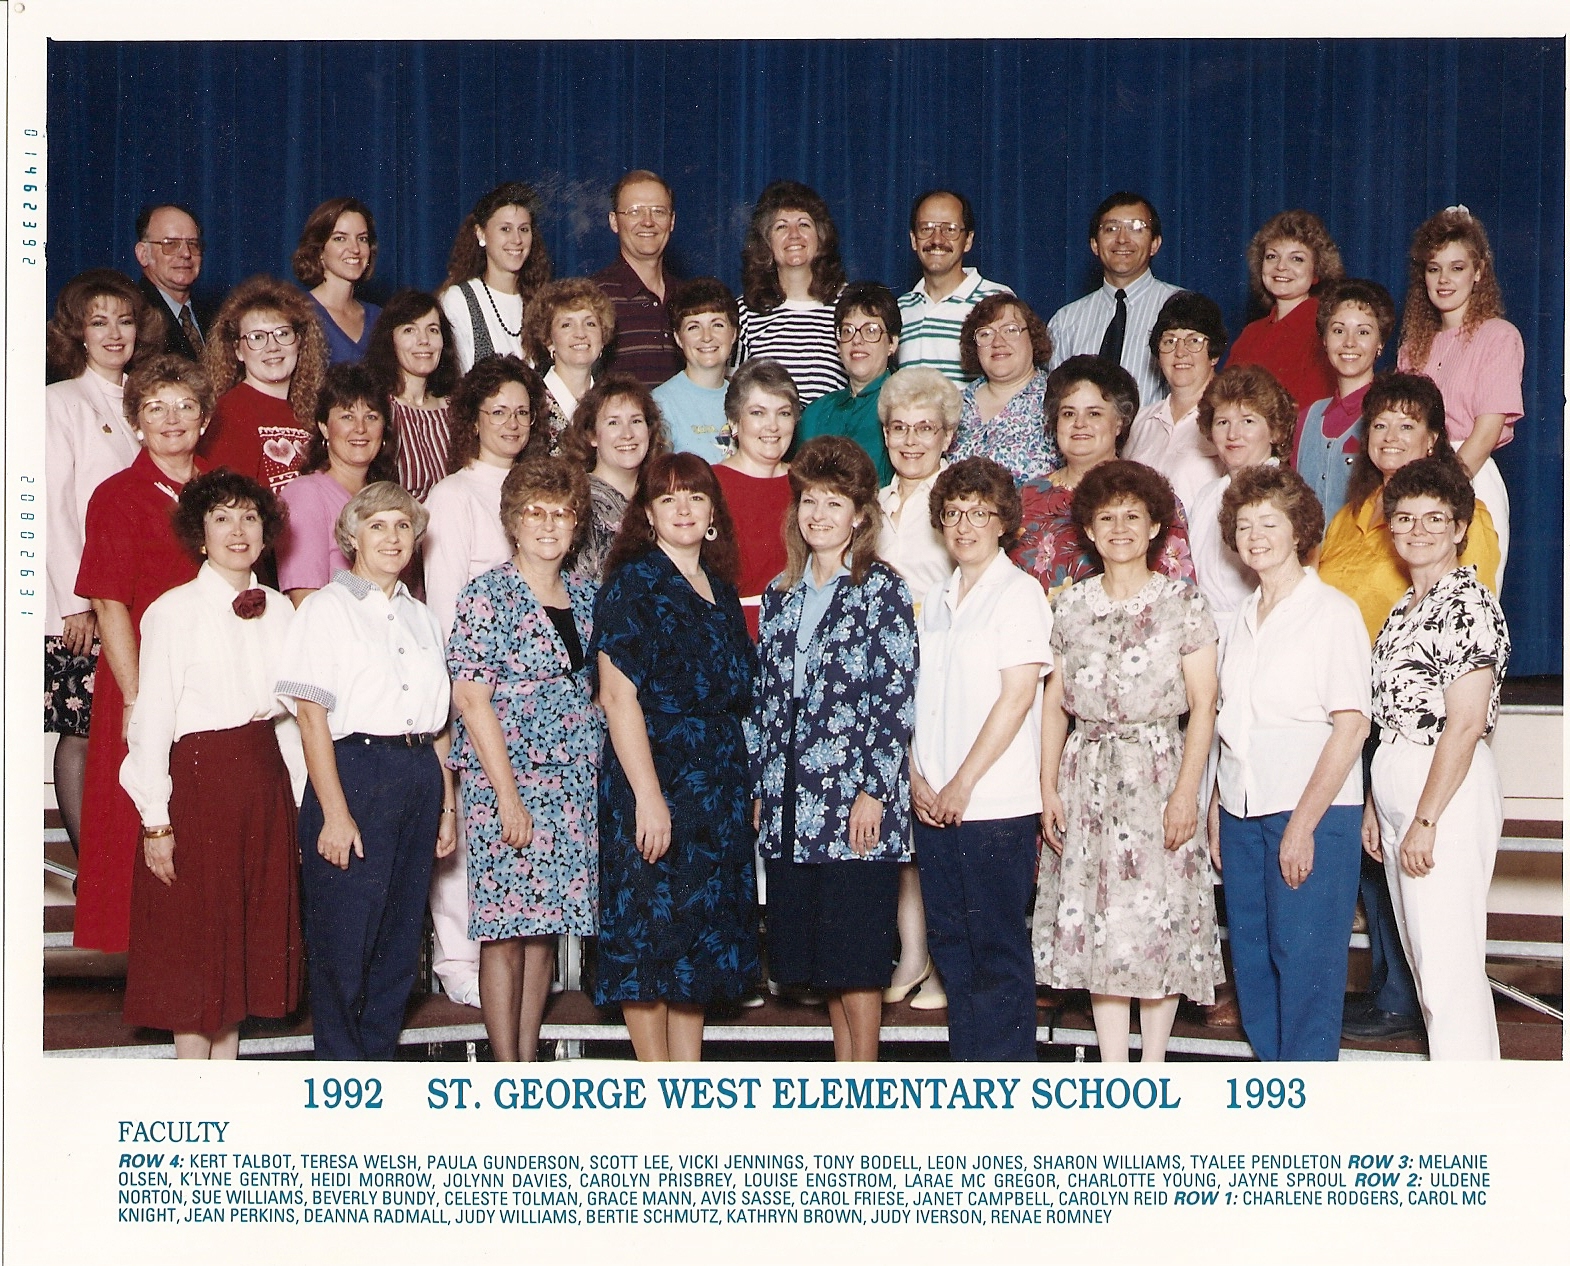 WCHS-00249 West Elementary School 1992-1993 Faculty